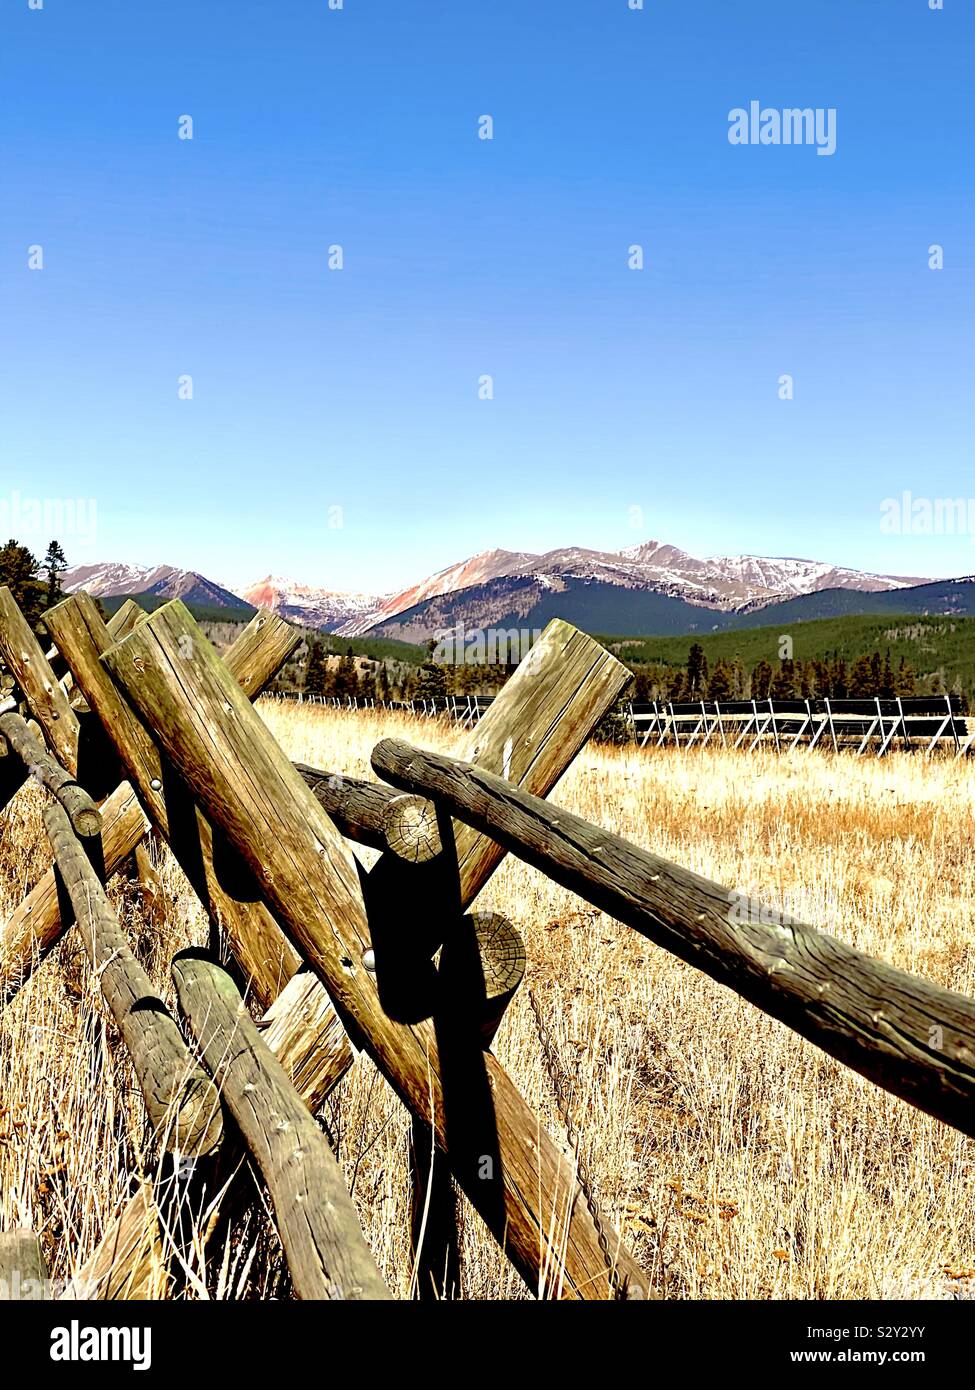 Colorado Mountains with rail fence Stock Photo